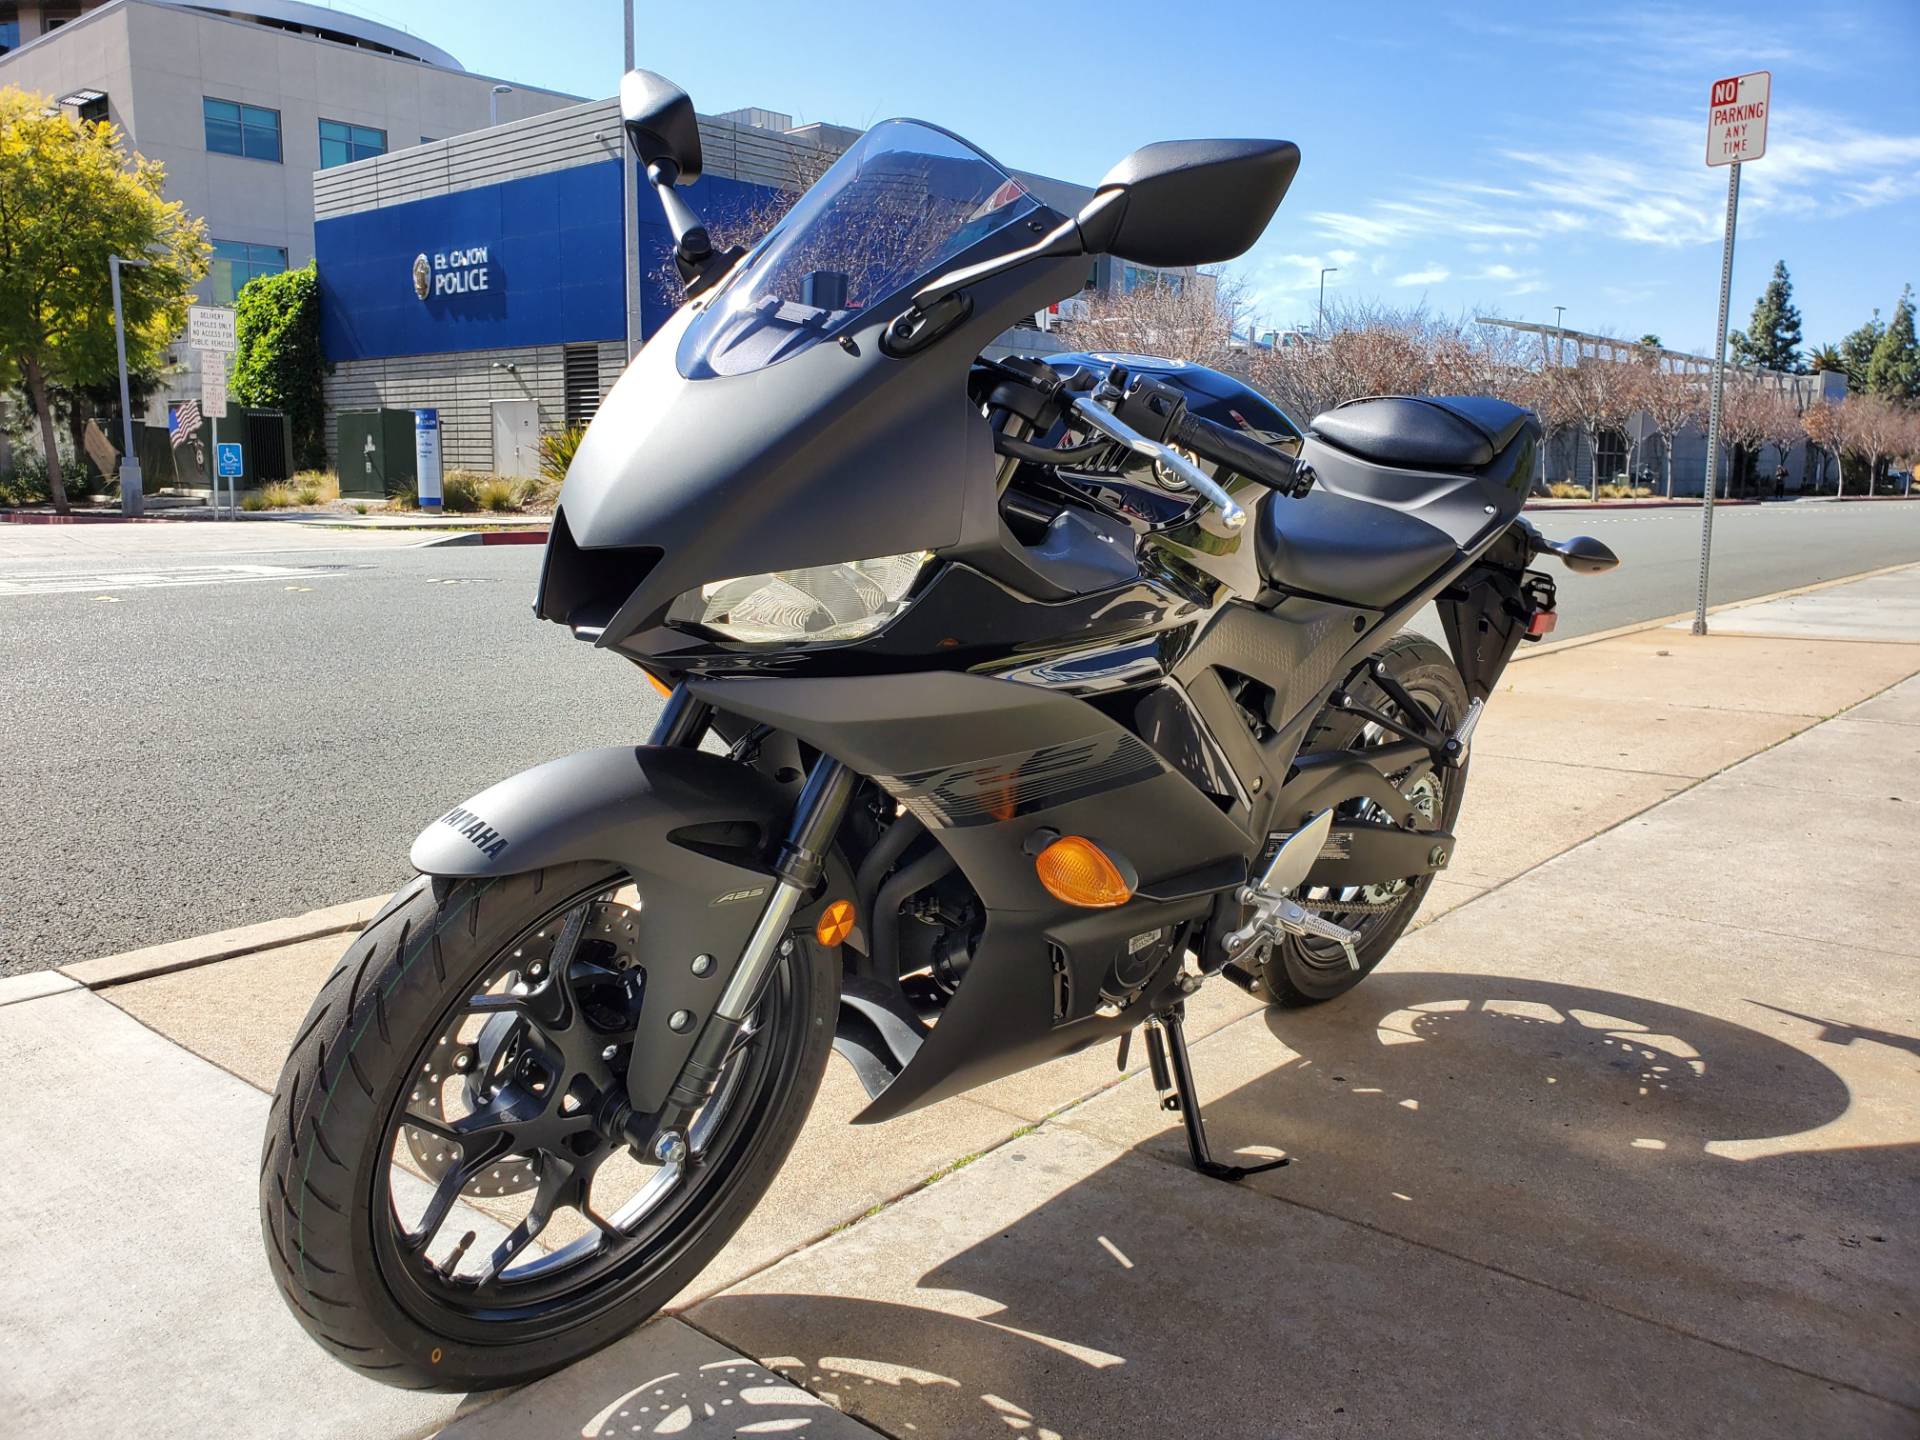 New 2020 Yamaha YZF-R3 ABS | Motorcycles in EL Cajon CA ...